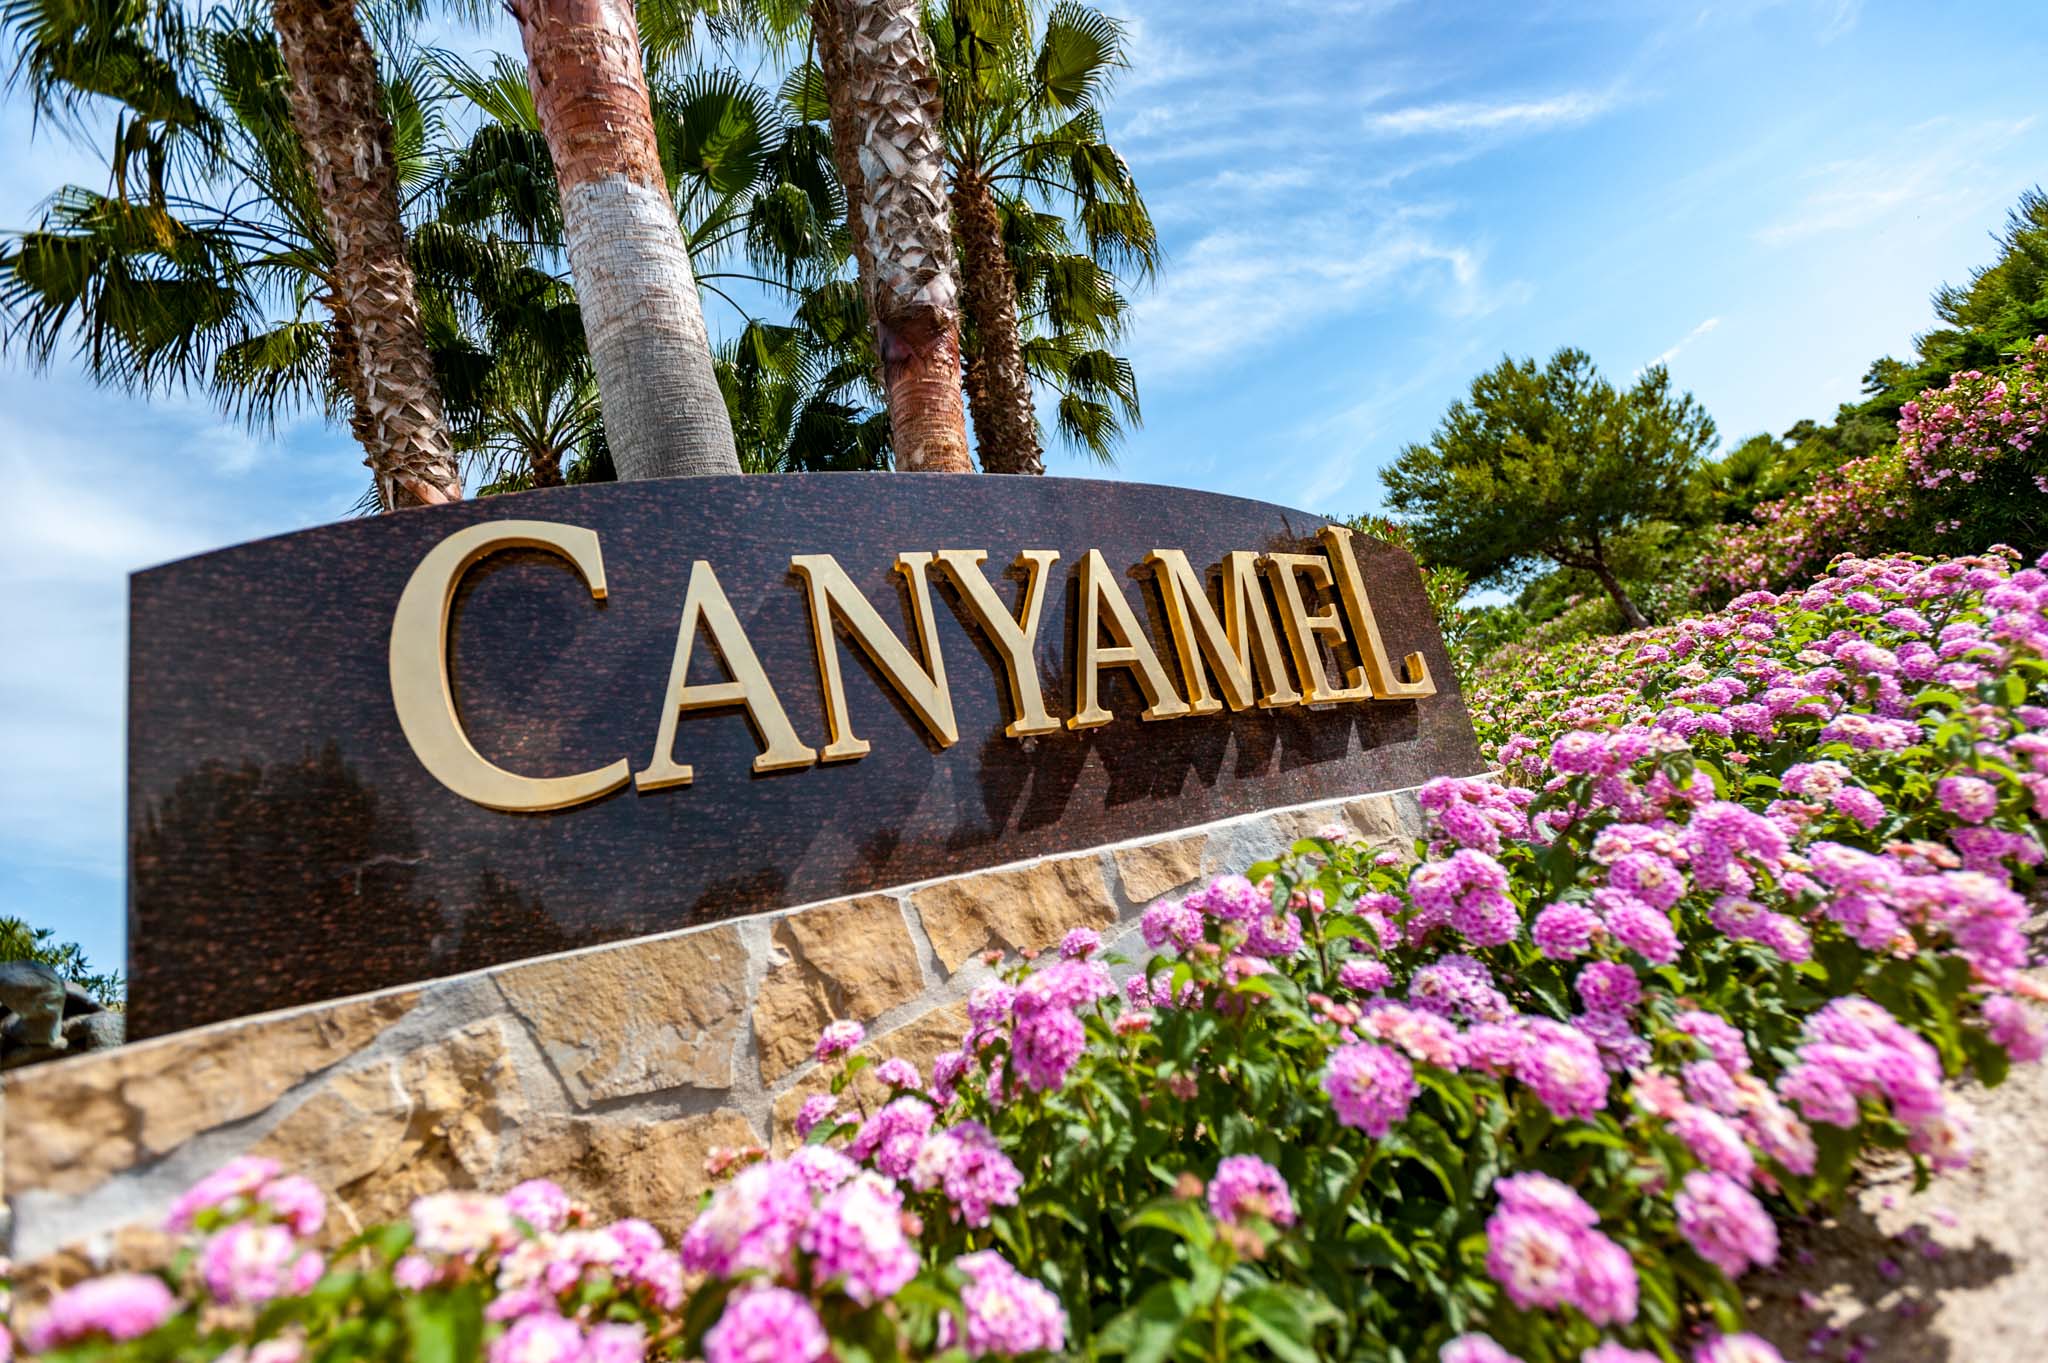 Canyamel Golf Course 